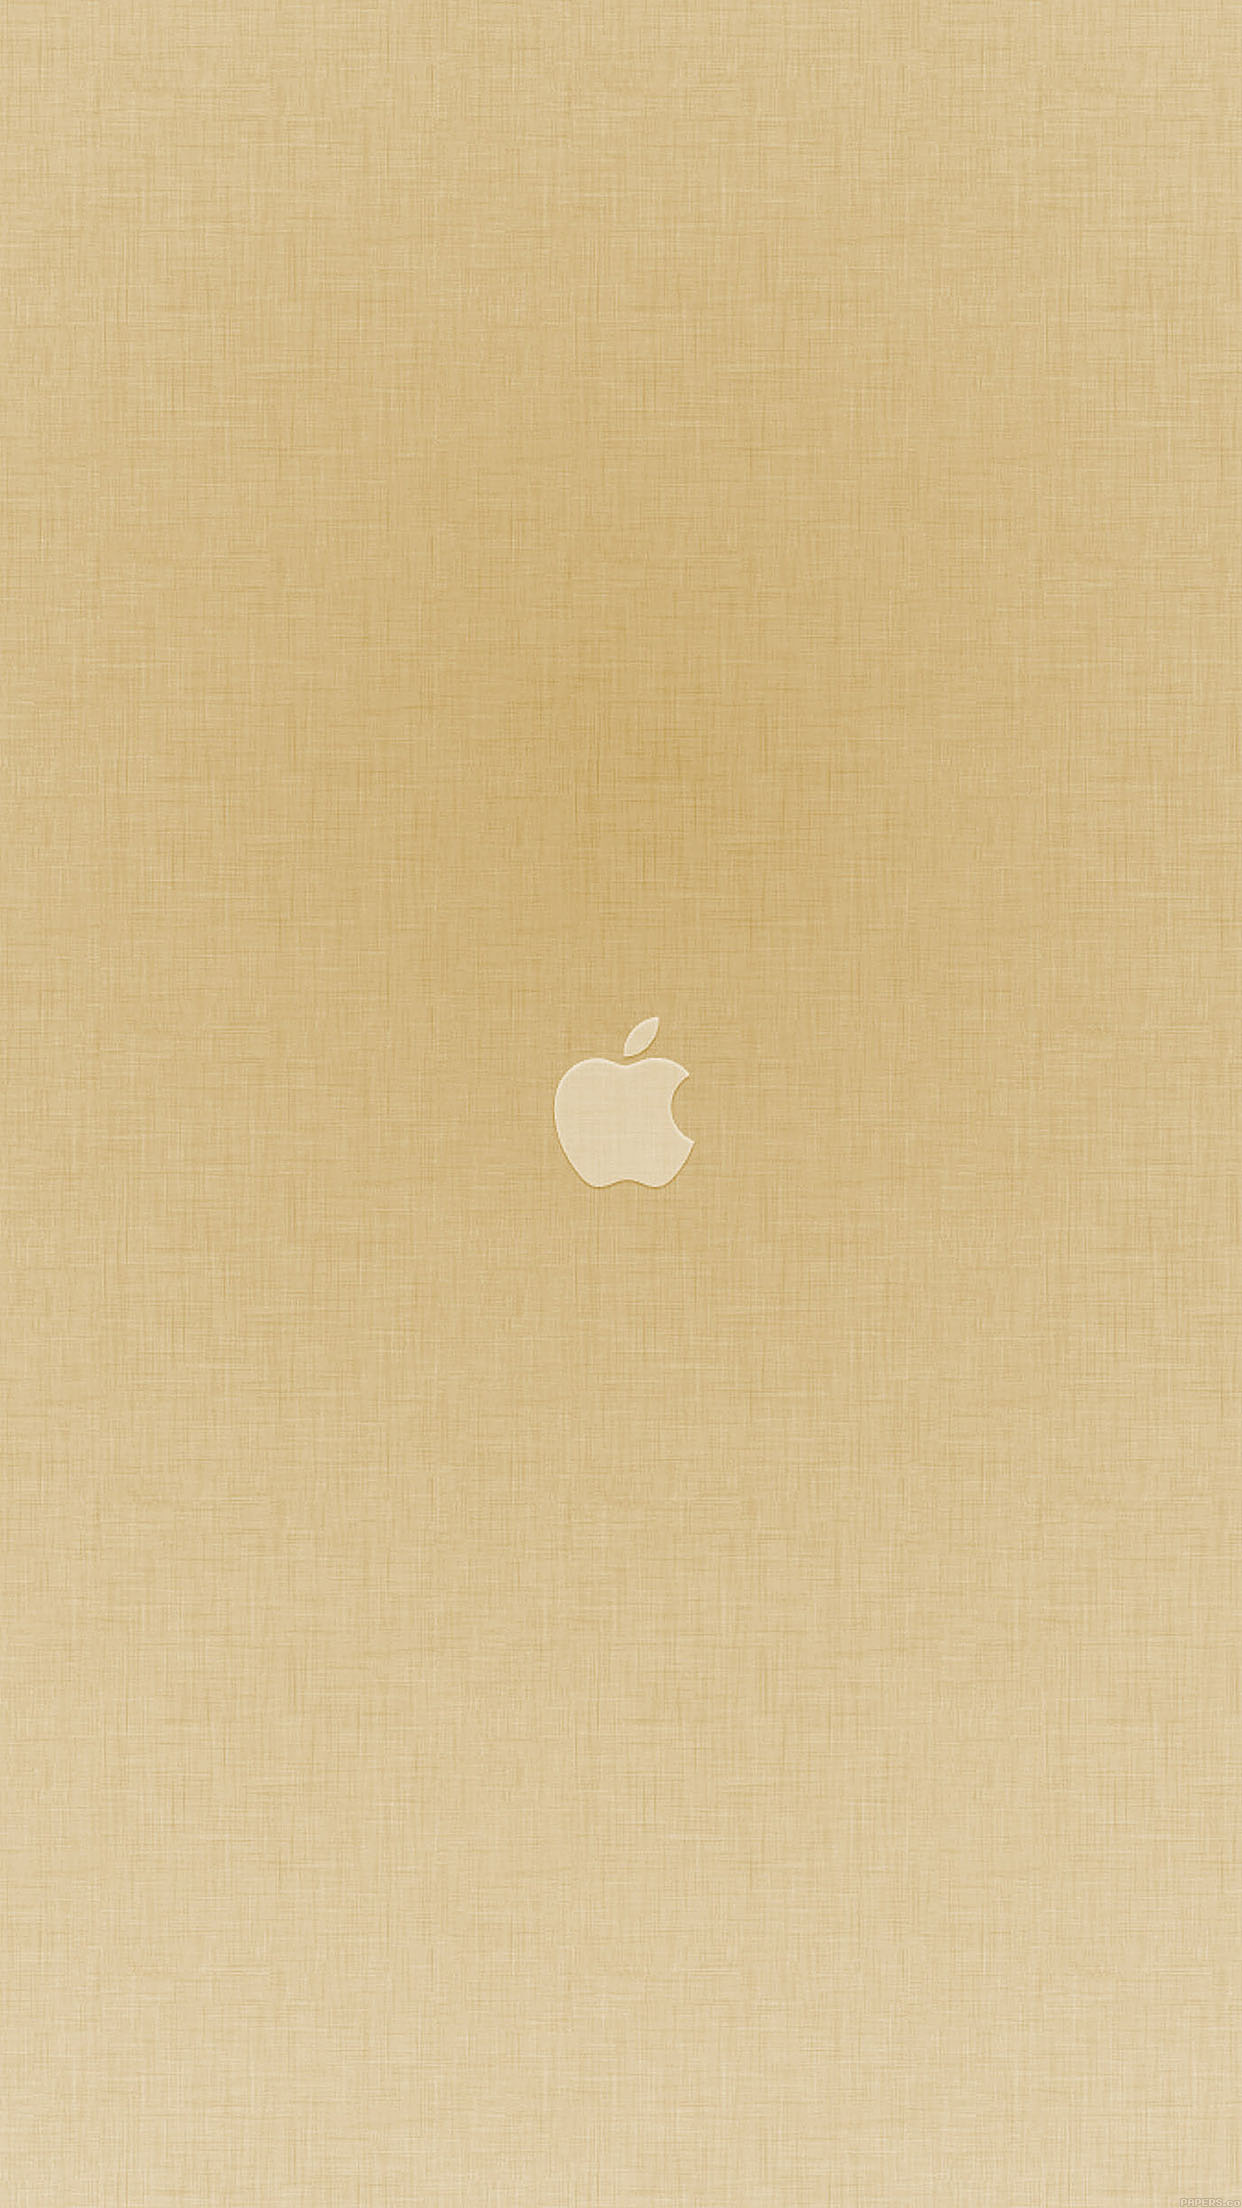 Tiny Apple Gold Minimal Android wallpaper